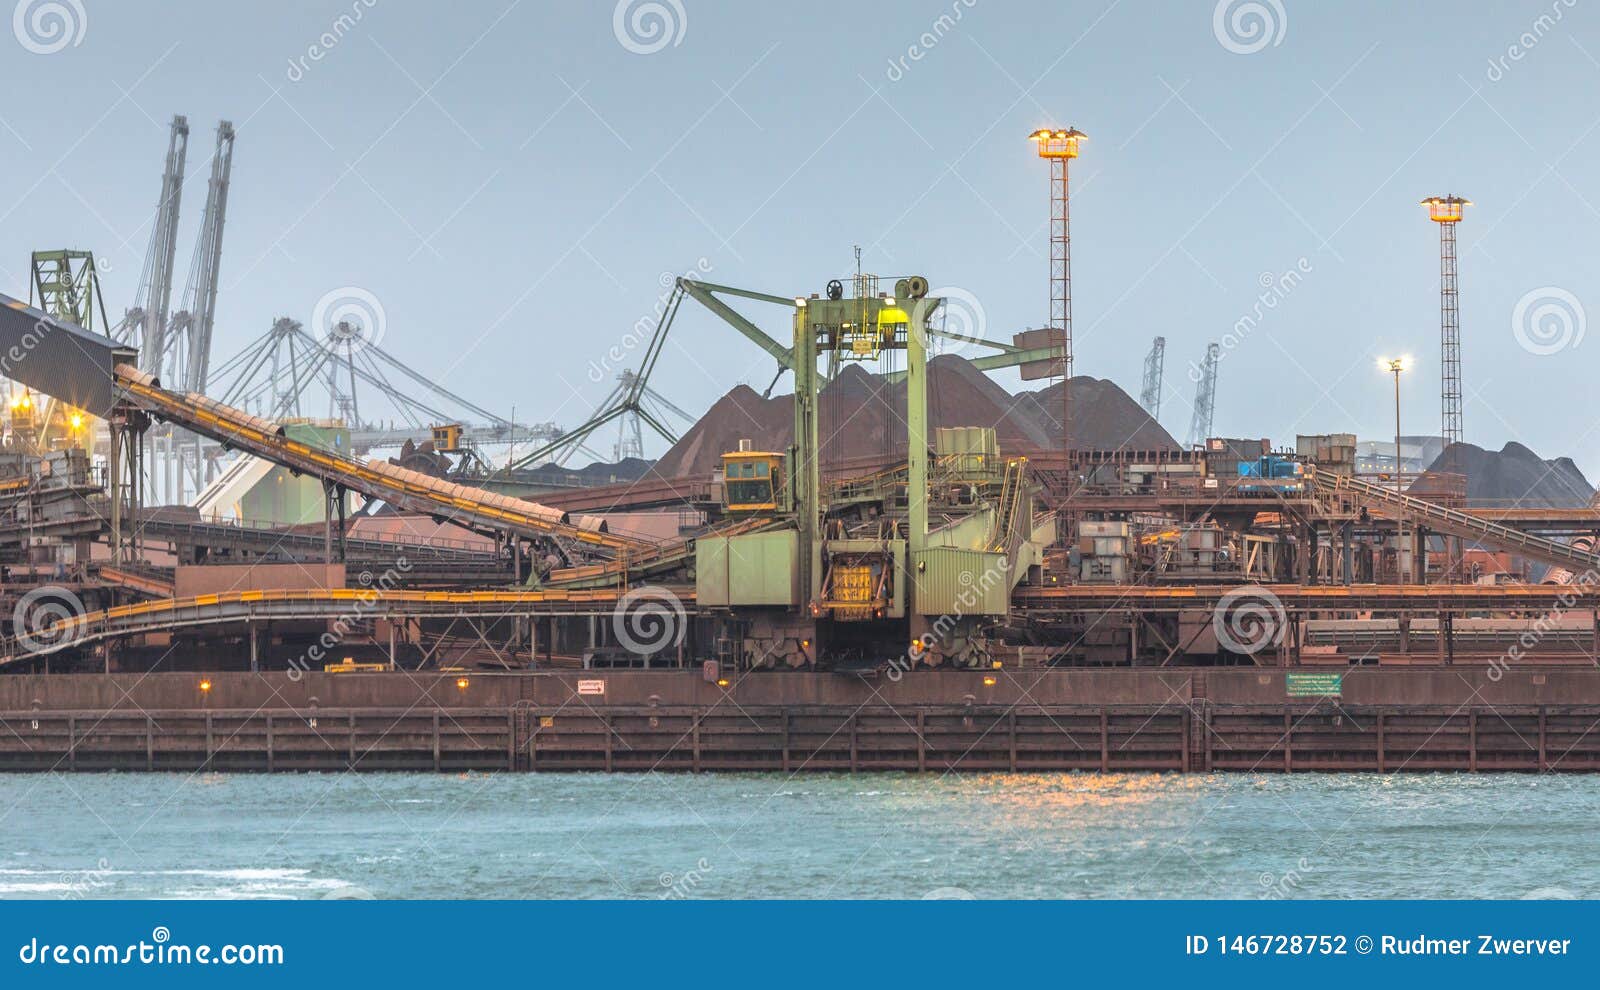 iron ore buk transshipment facility crop